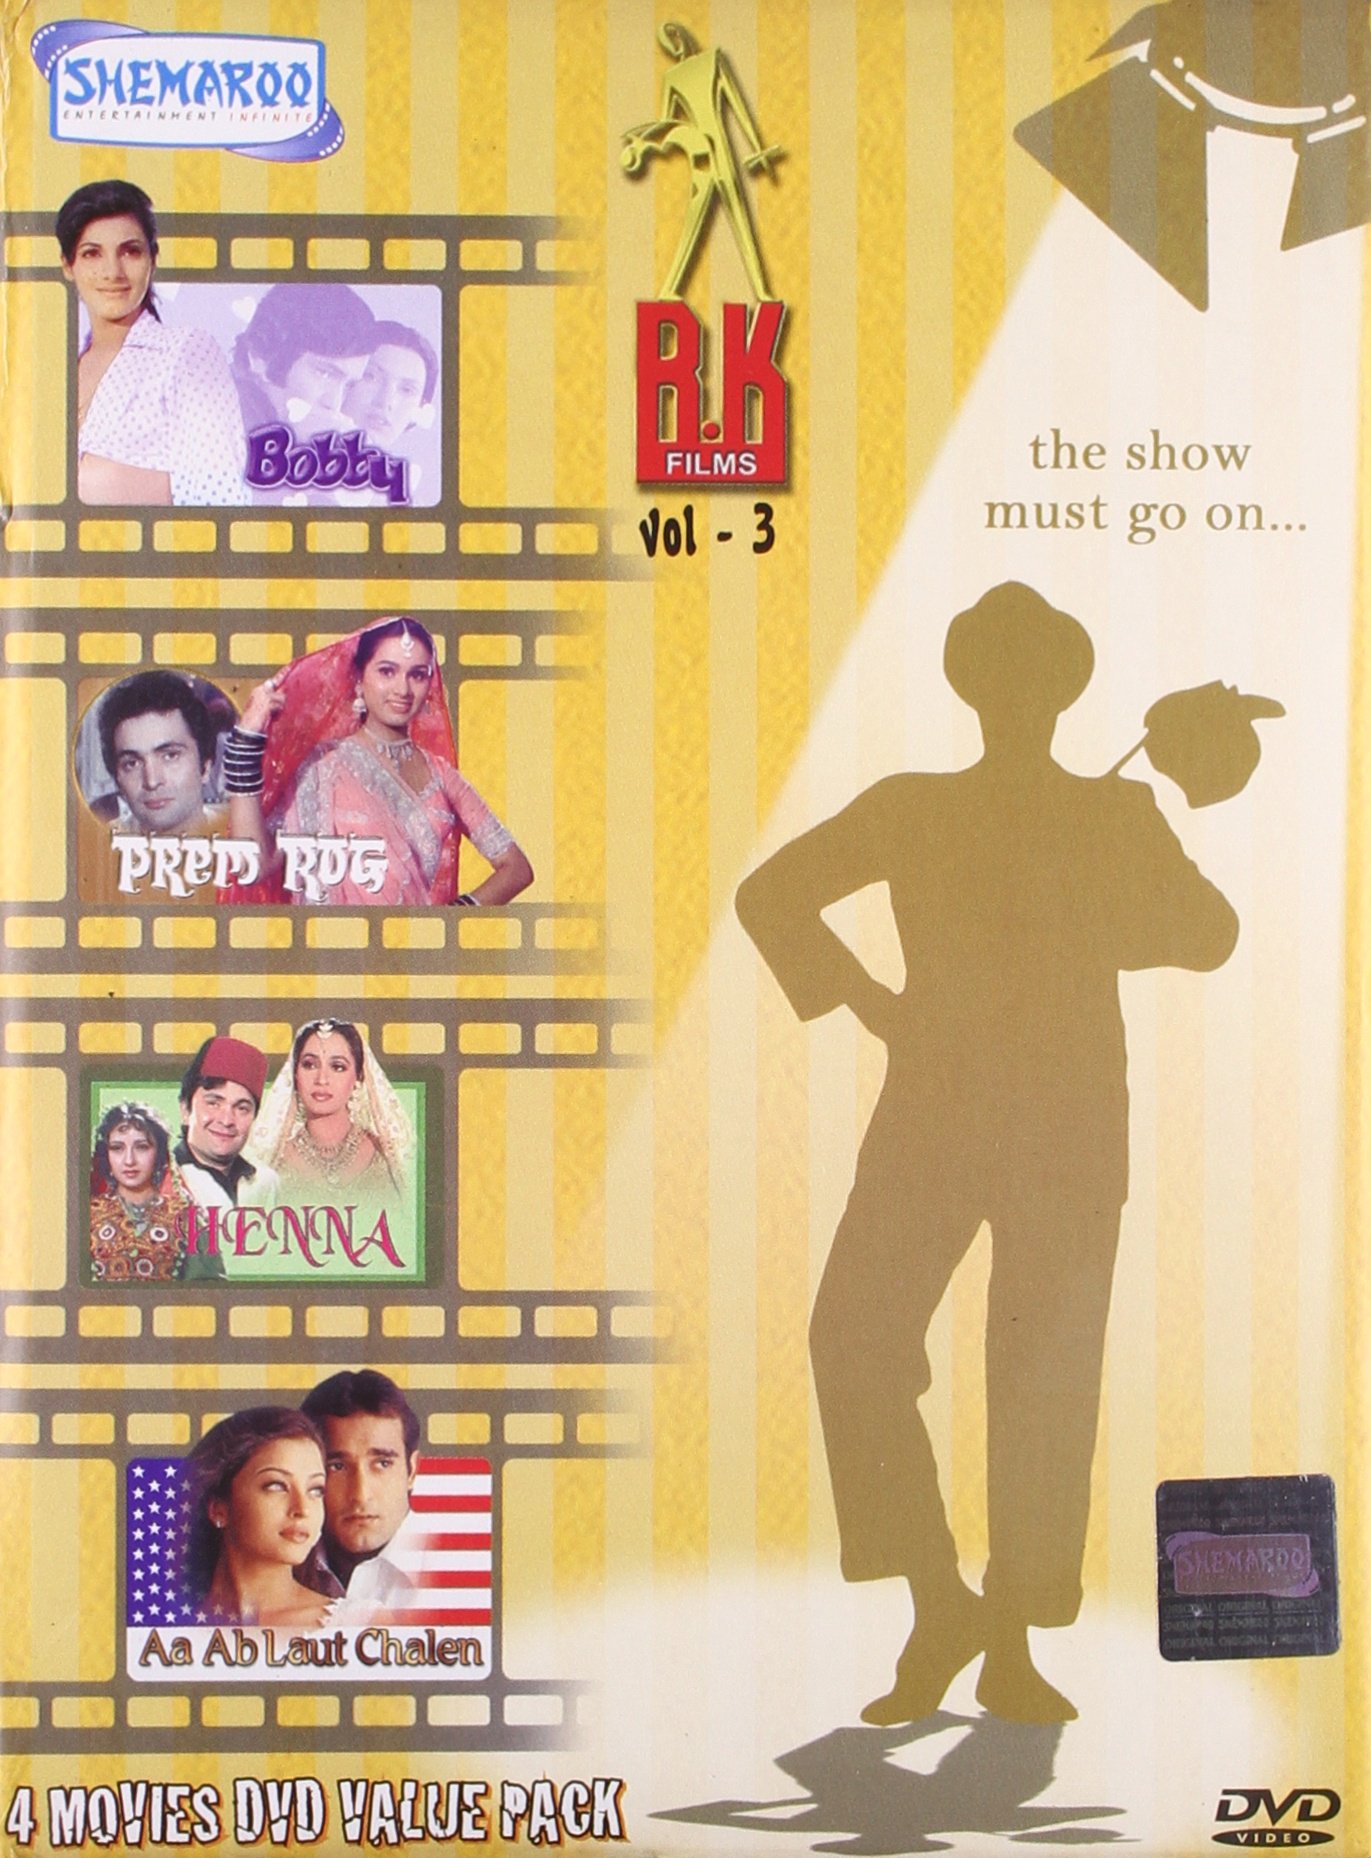 r-k-films-4-movie-pack-vol-3-bobby-prem-rog-henna-aa-ab-laut-chalen